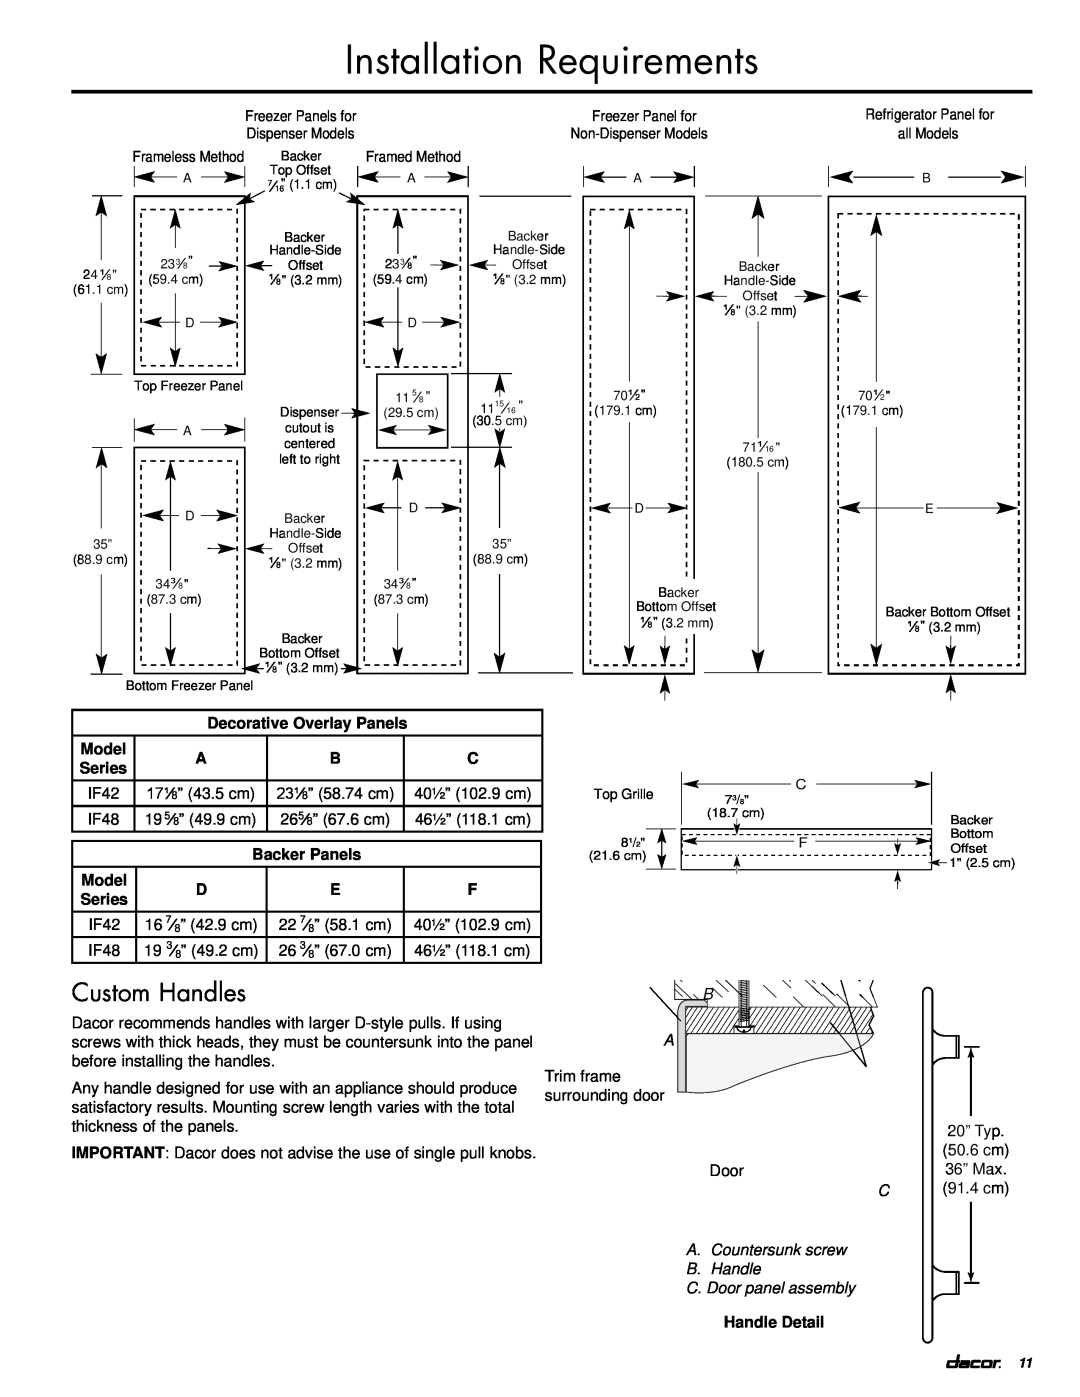 Dacor EF42DBSS, IF42DBOL manual Custom Handles, Installation Requirements, Decorative Overlay Panels, Model, Handle Detail 